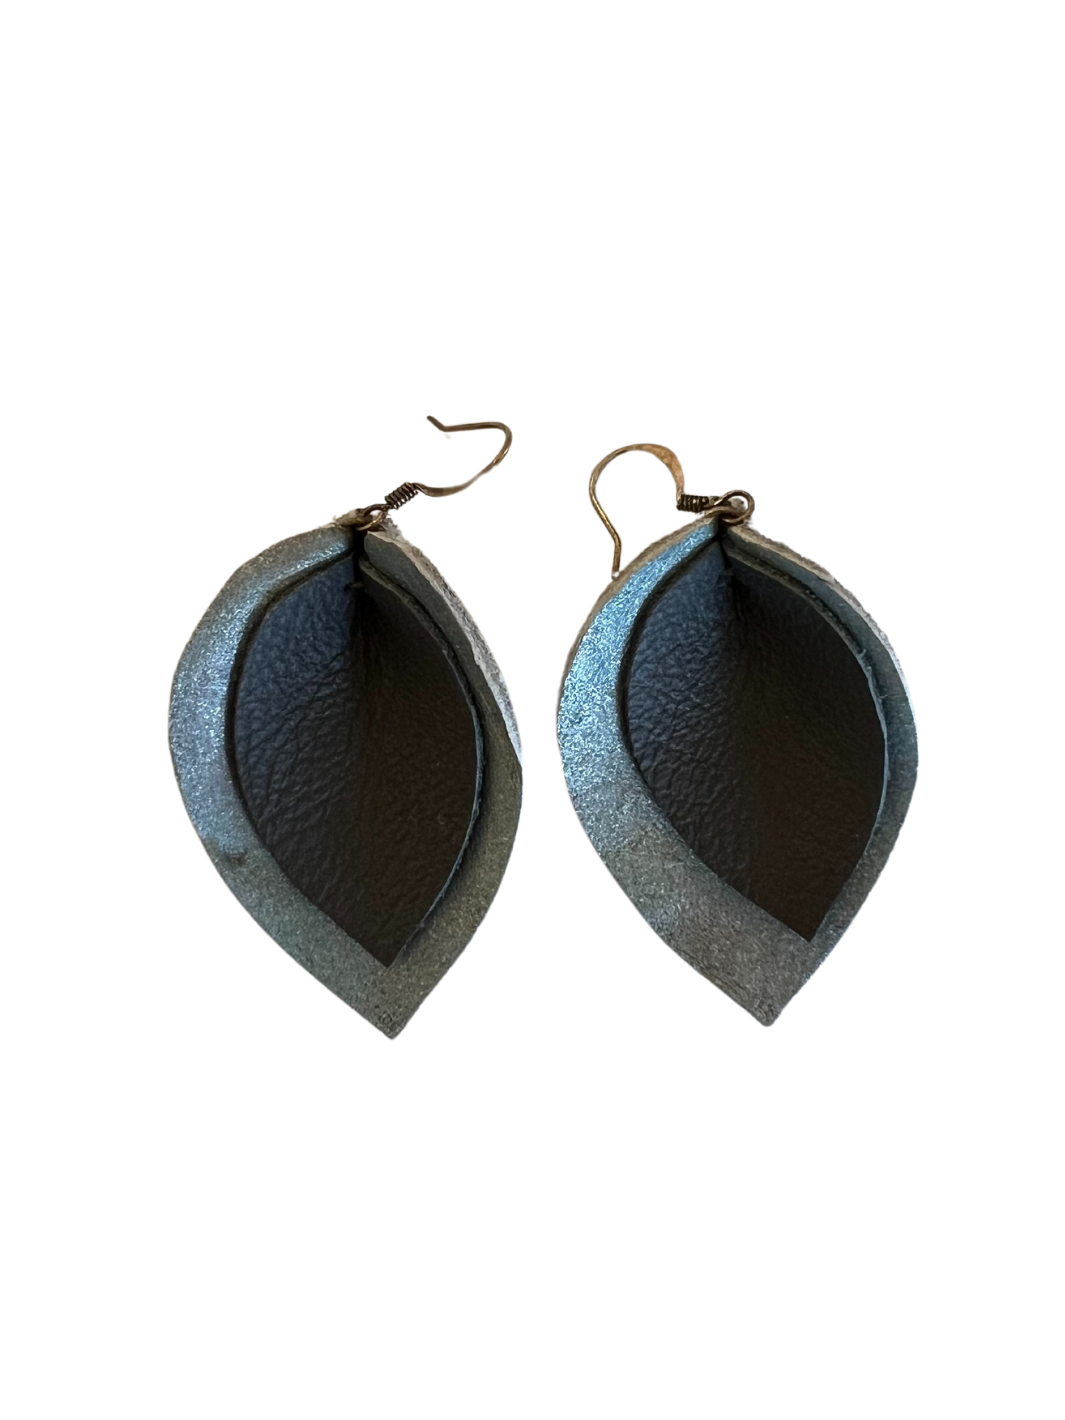 Custom Cognac Leather Earrings by Lenehan Studios